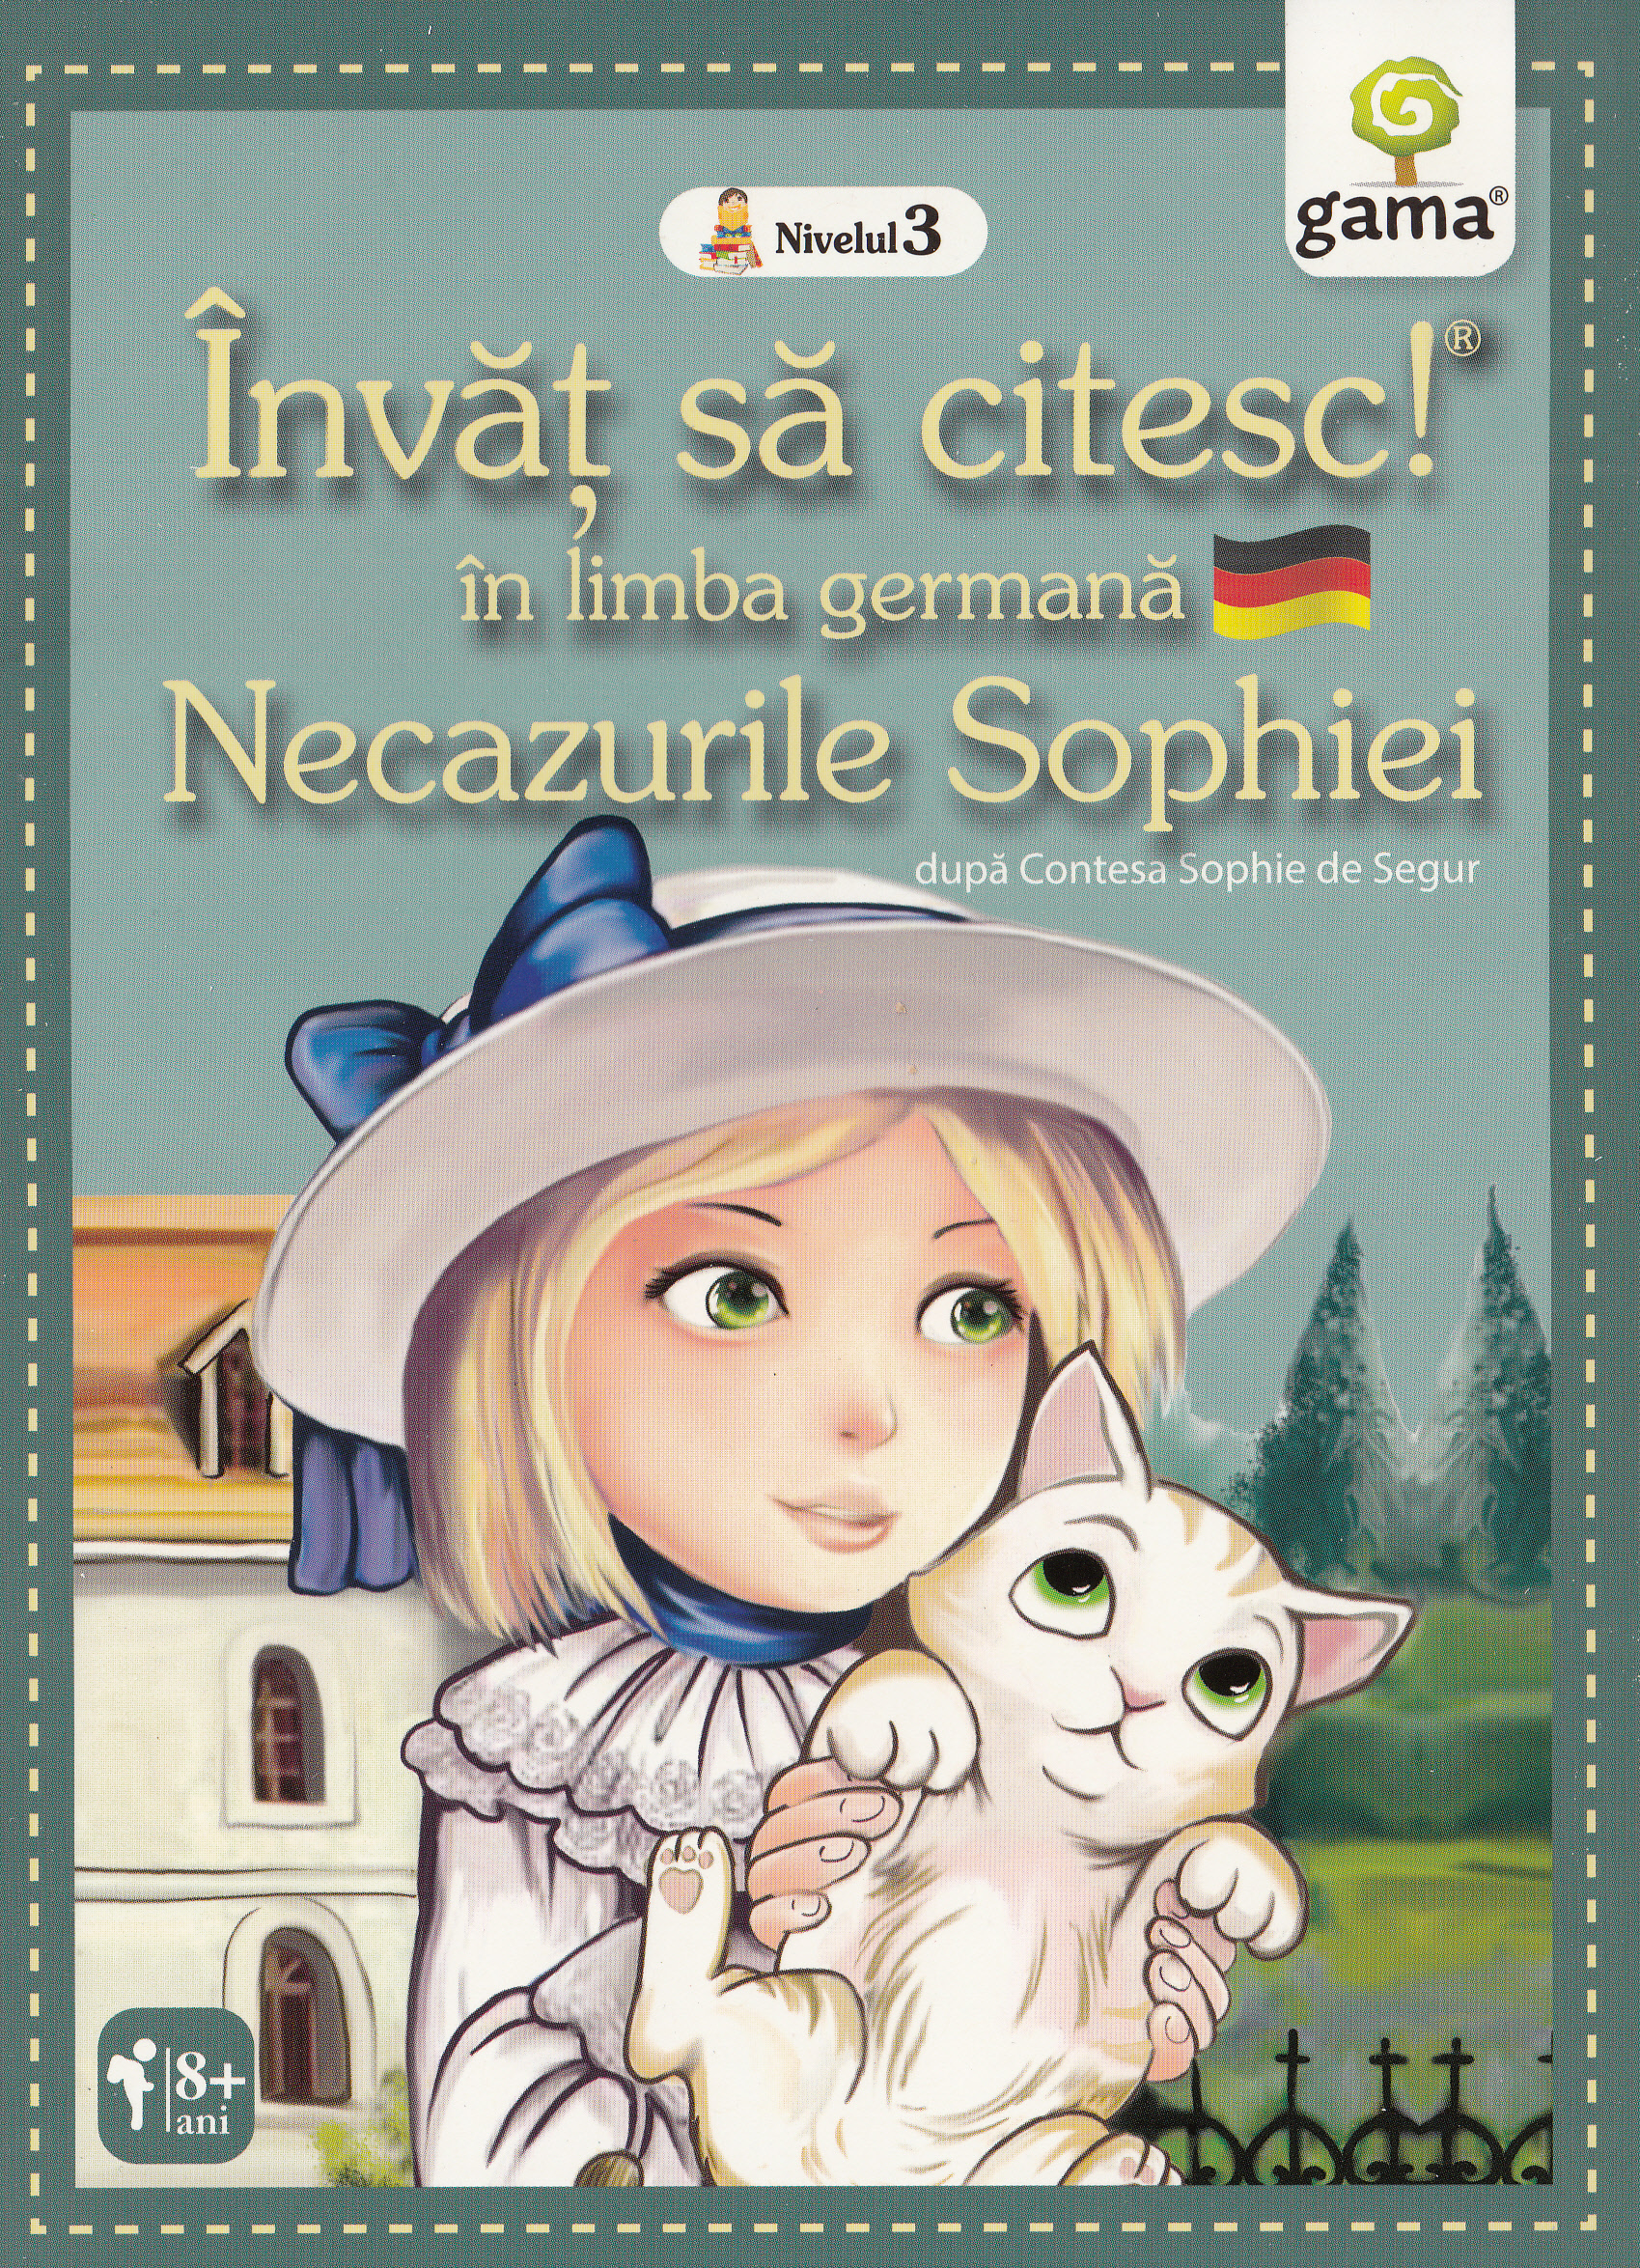 Invat sa citesc in limba germana - Necazurile Sophiei - Nivelul 3